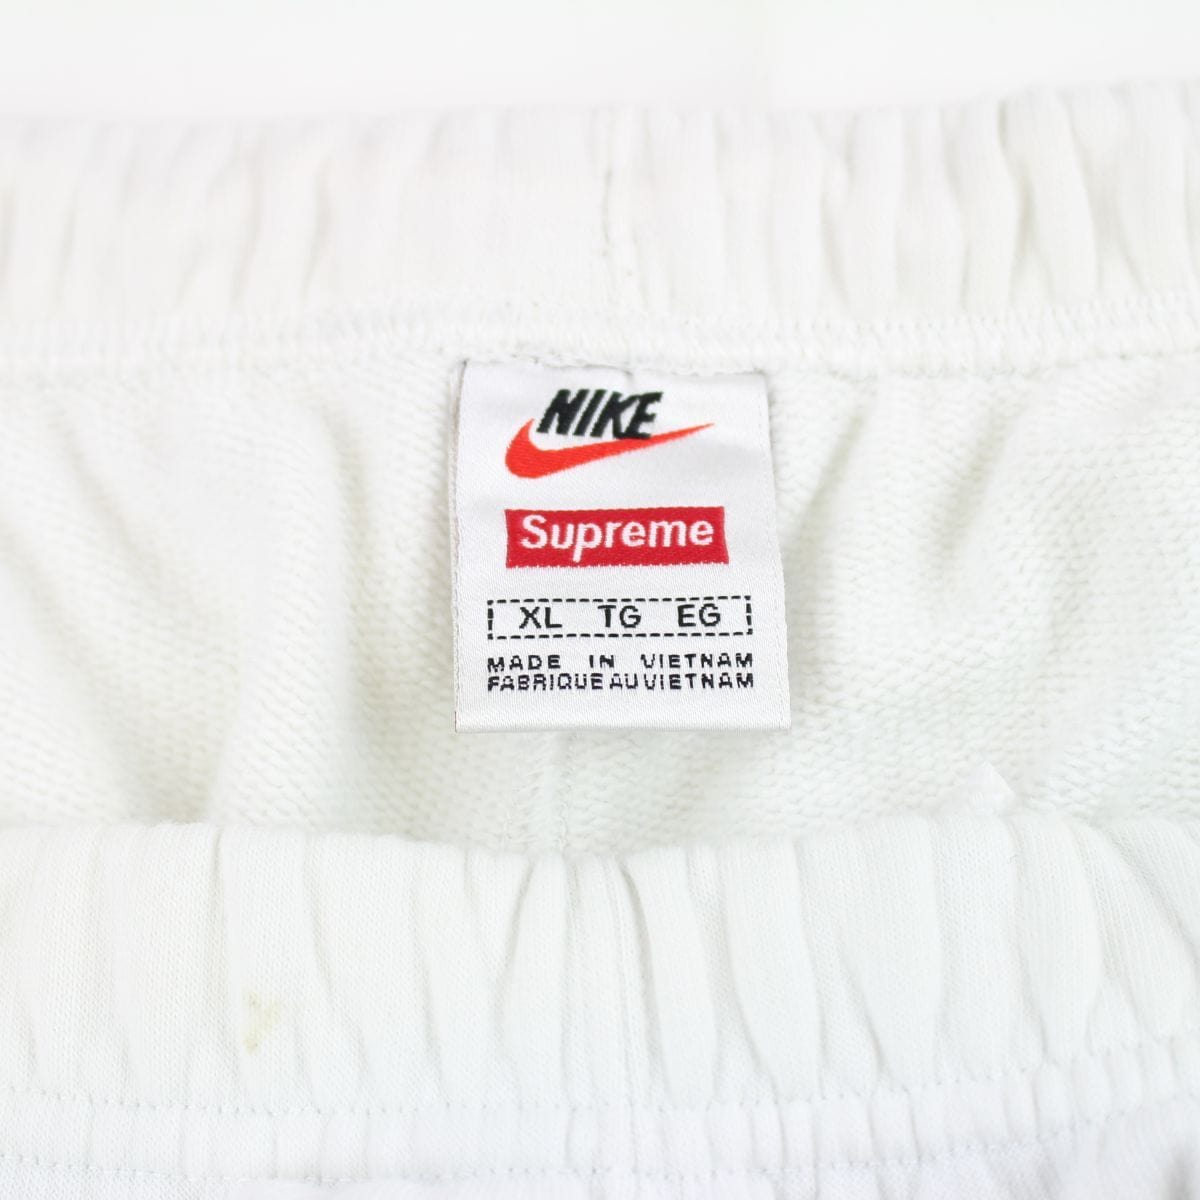 Supreme x Nike Stripe sweatpants Navy 2018 - SaruGeneral